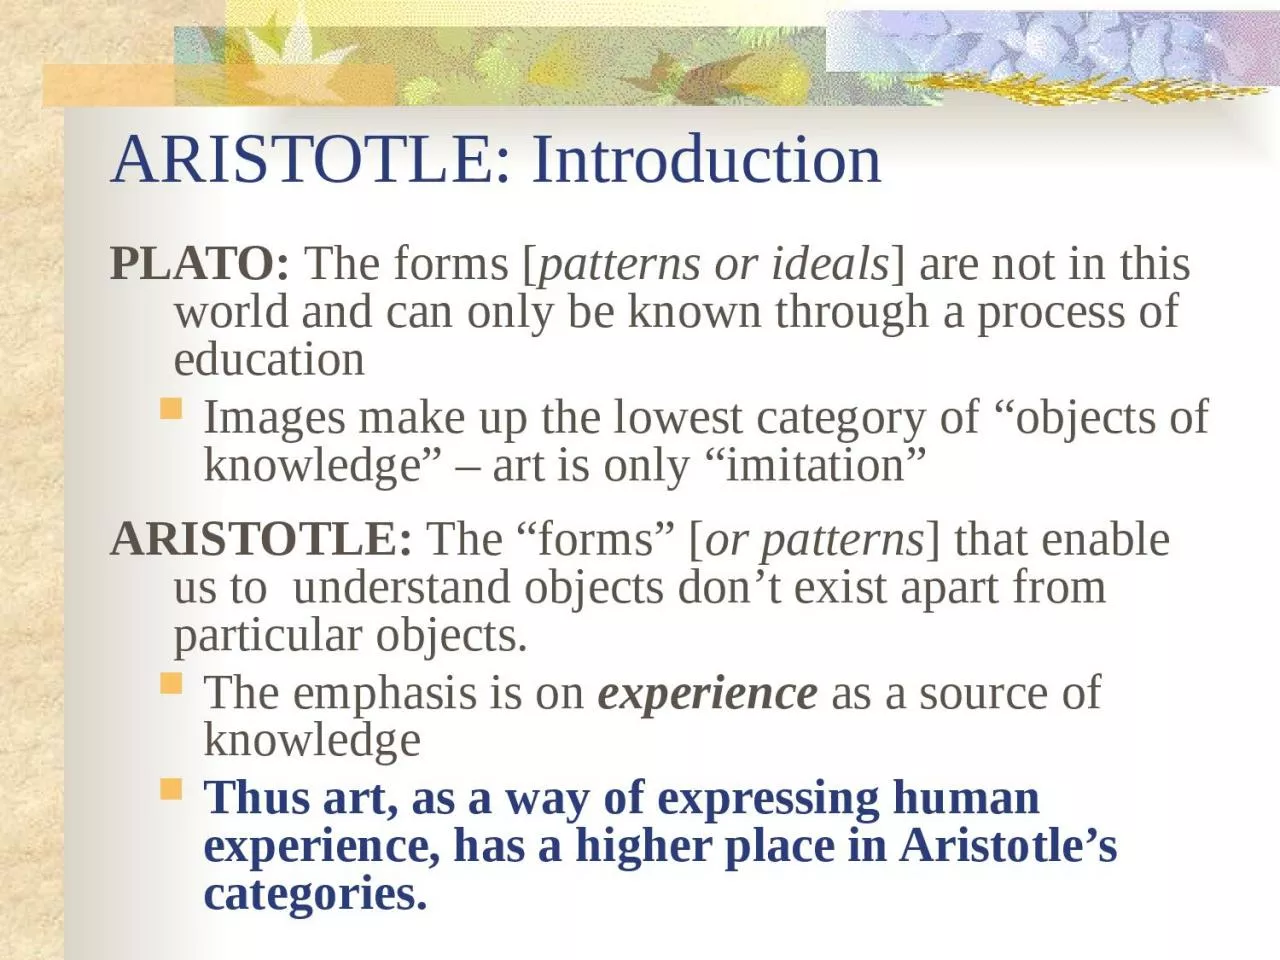 ARISTOTLE: Introduction